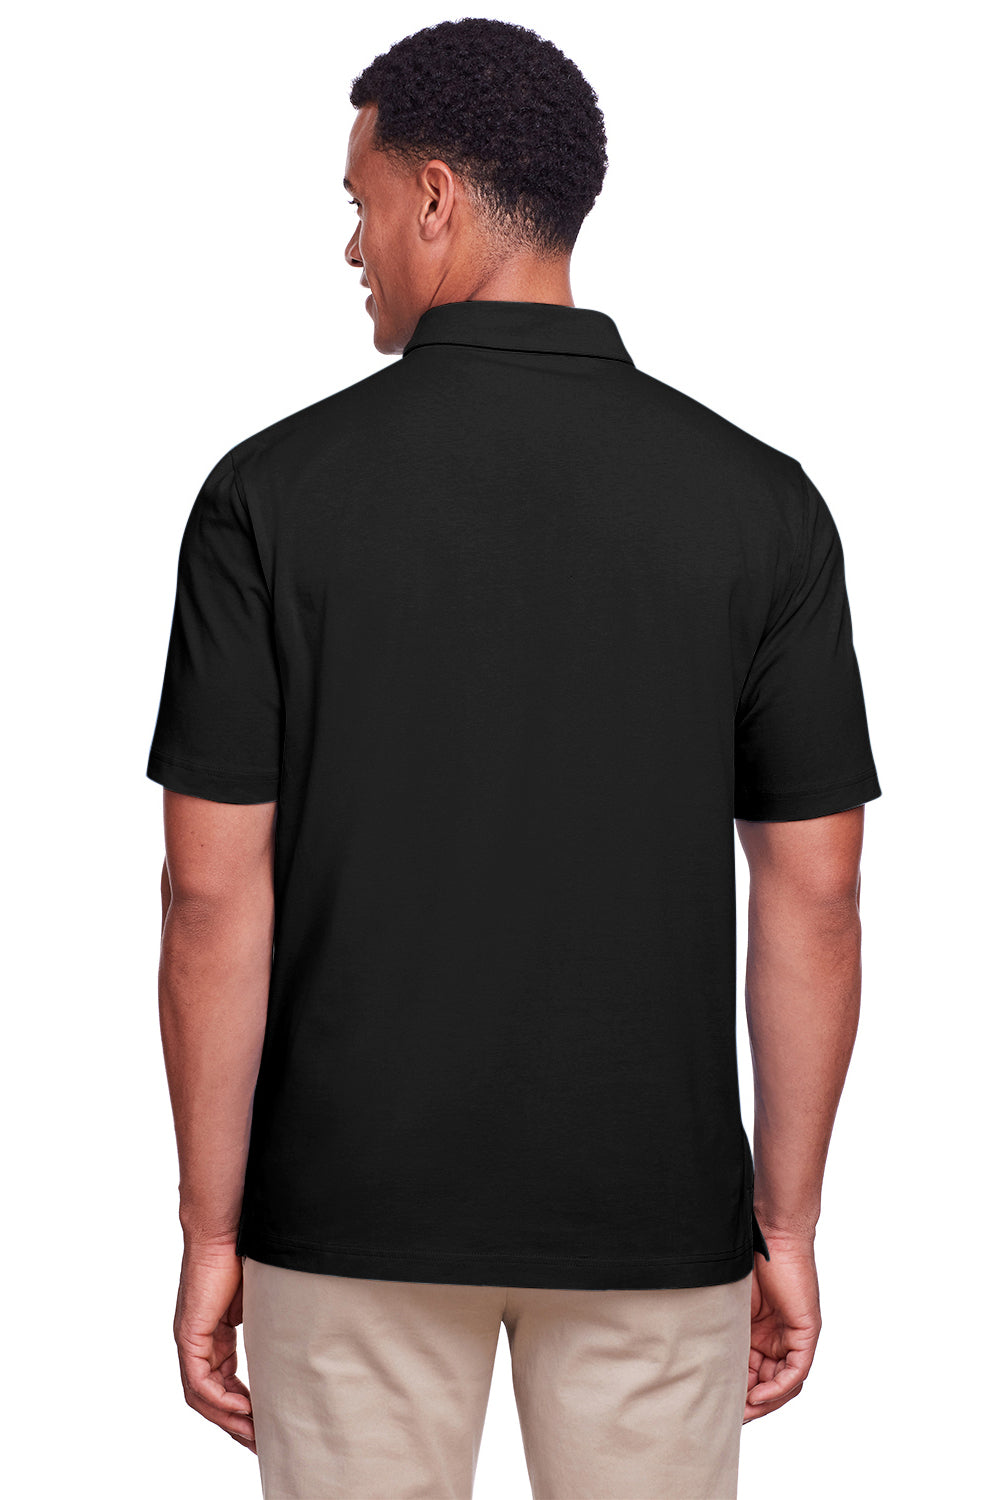 UltraClub UC105 Mens Lakeshore Performance Moisture Wicking Short Sleeve Polo Shirt Black Back